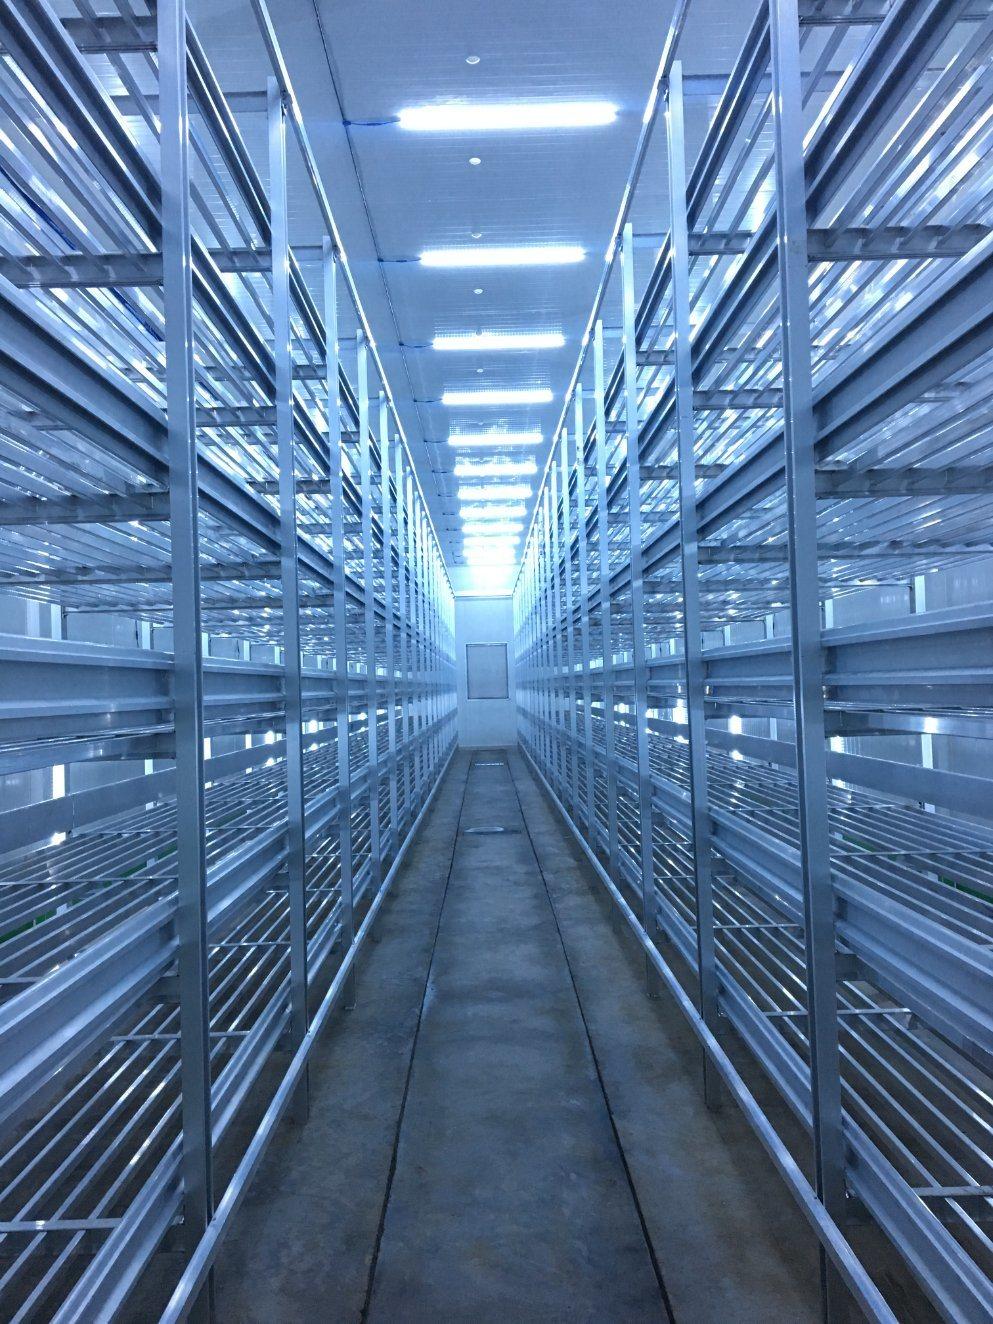 Mushroom Aluminium Alloy Growing Shelves for Farm